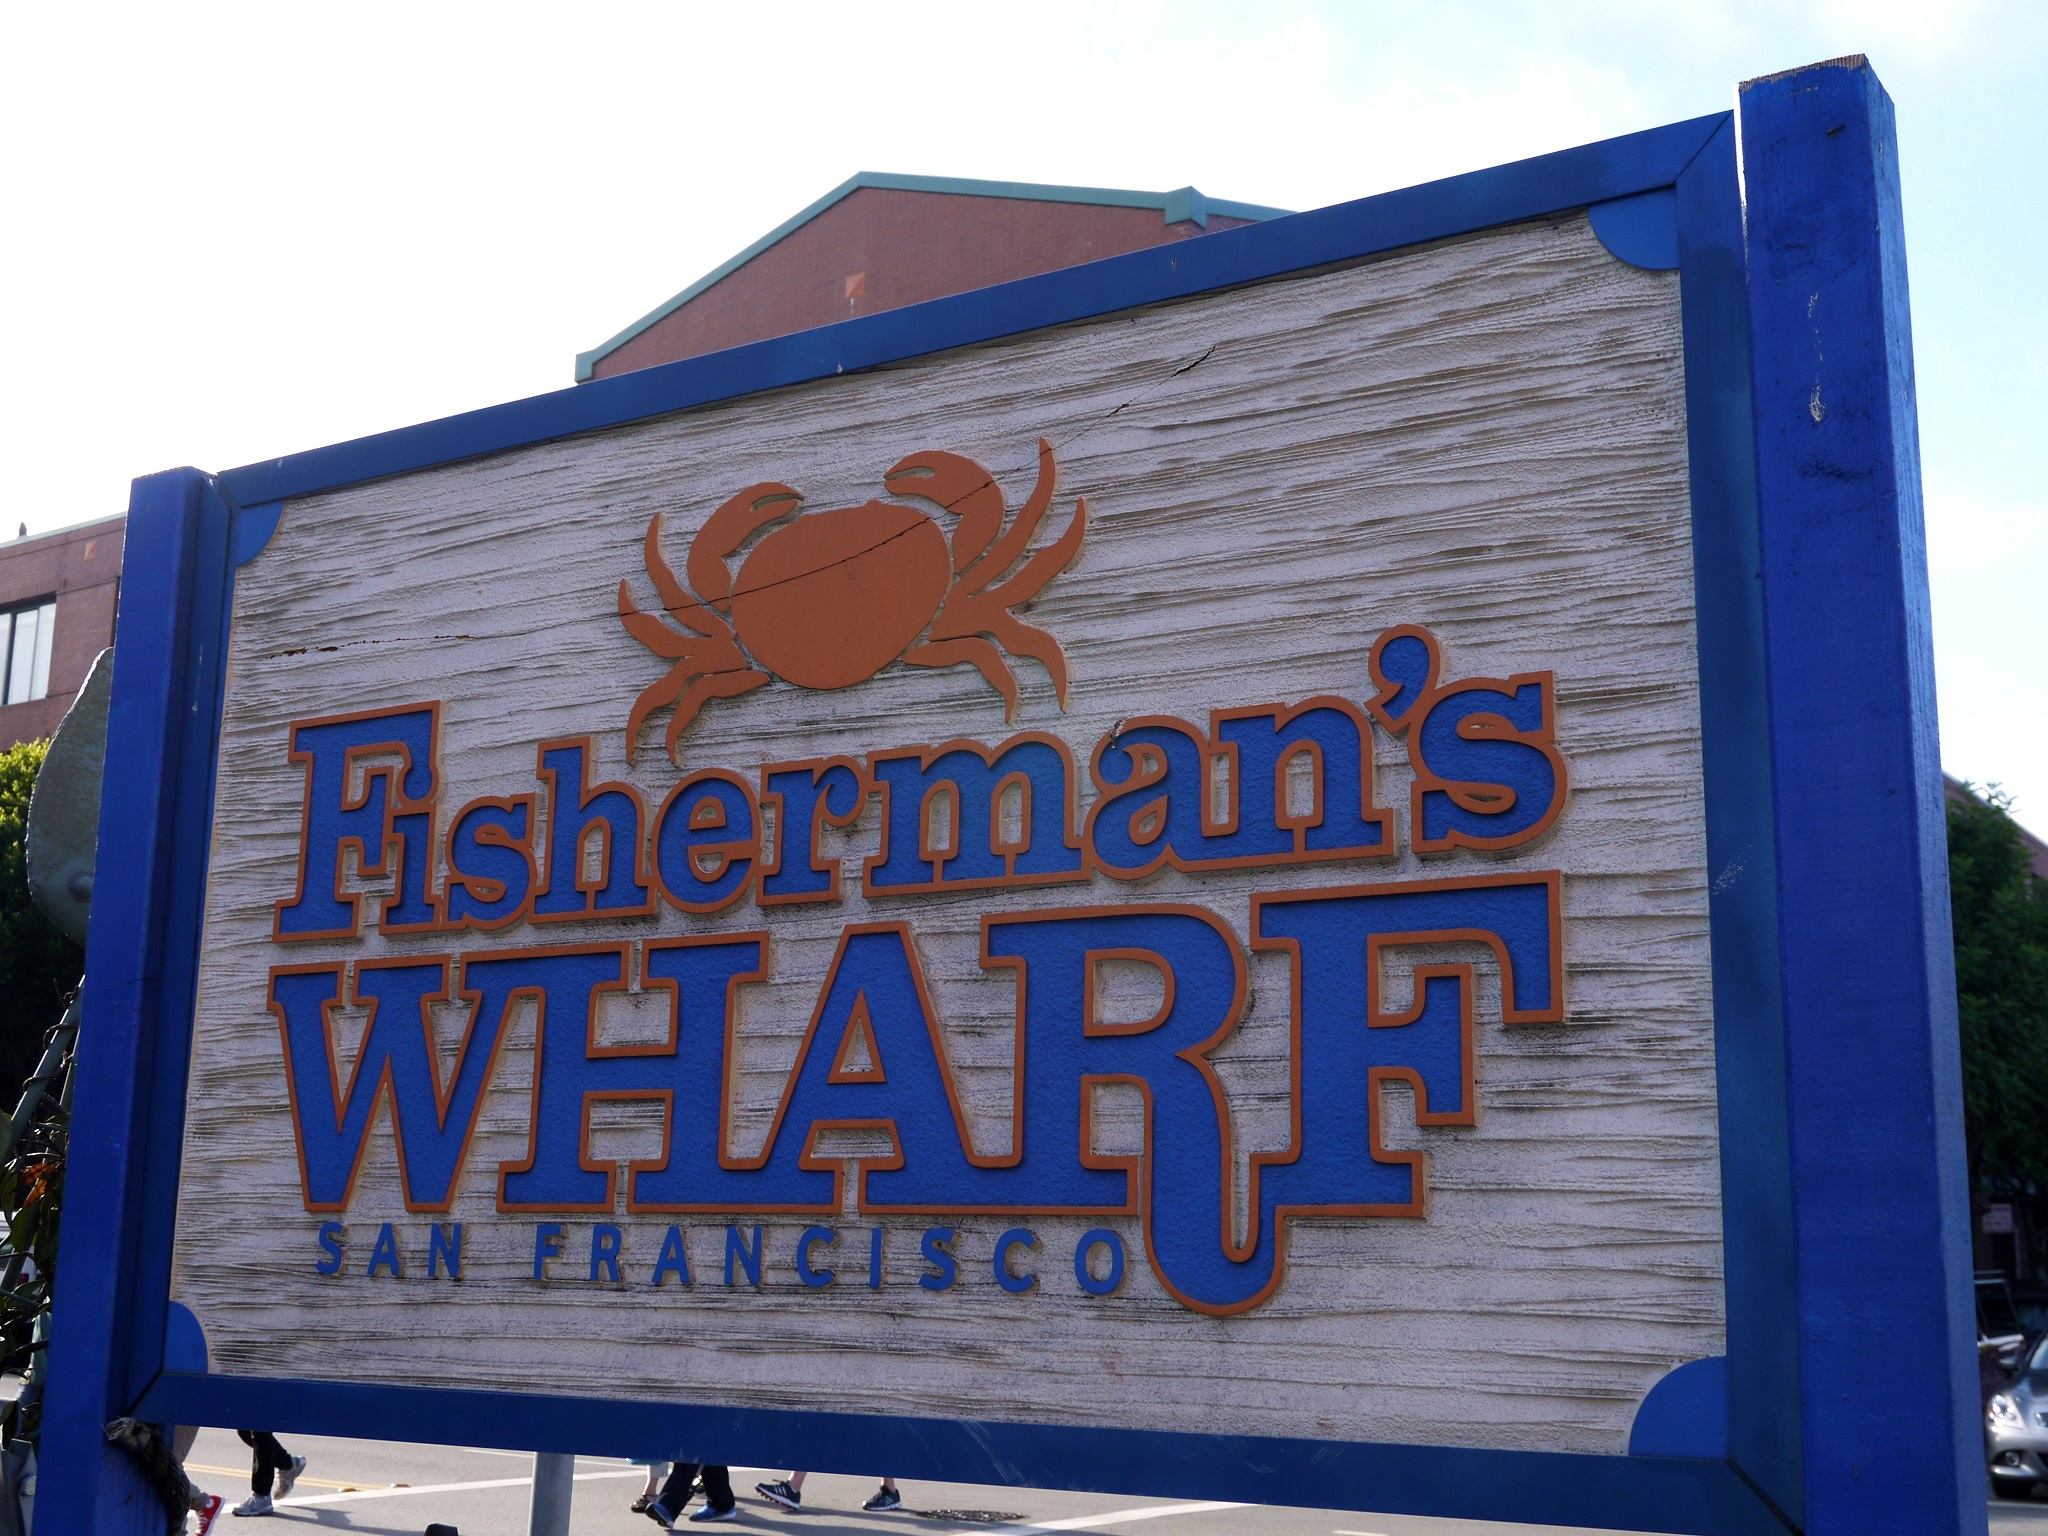 舊金山必去景點- 漁人碼頭(Fisherman's Wharf) - follow Wayne go abroad